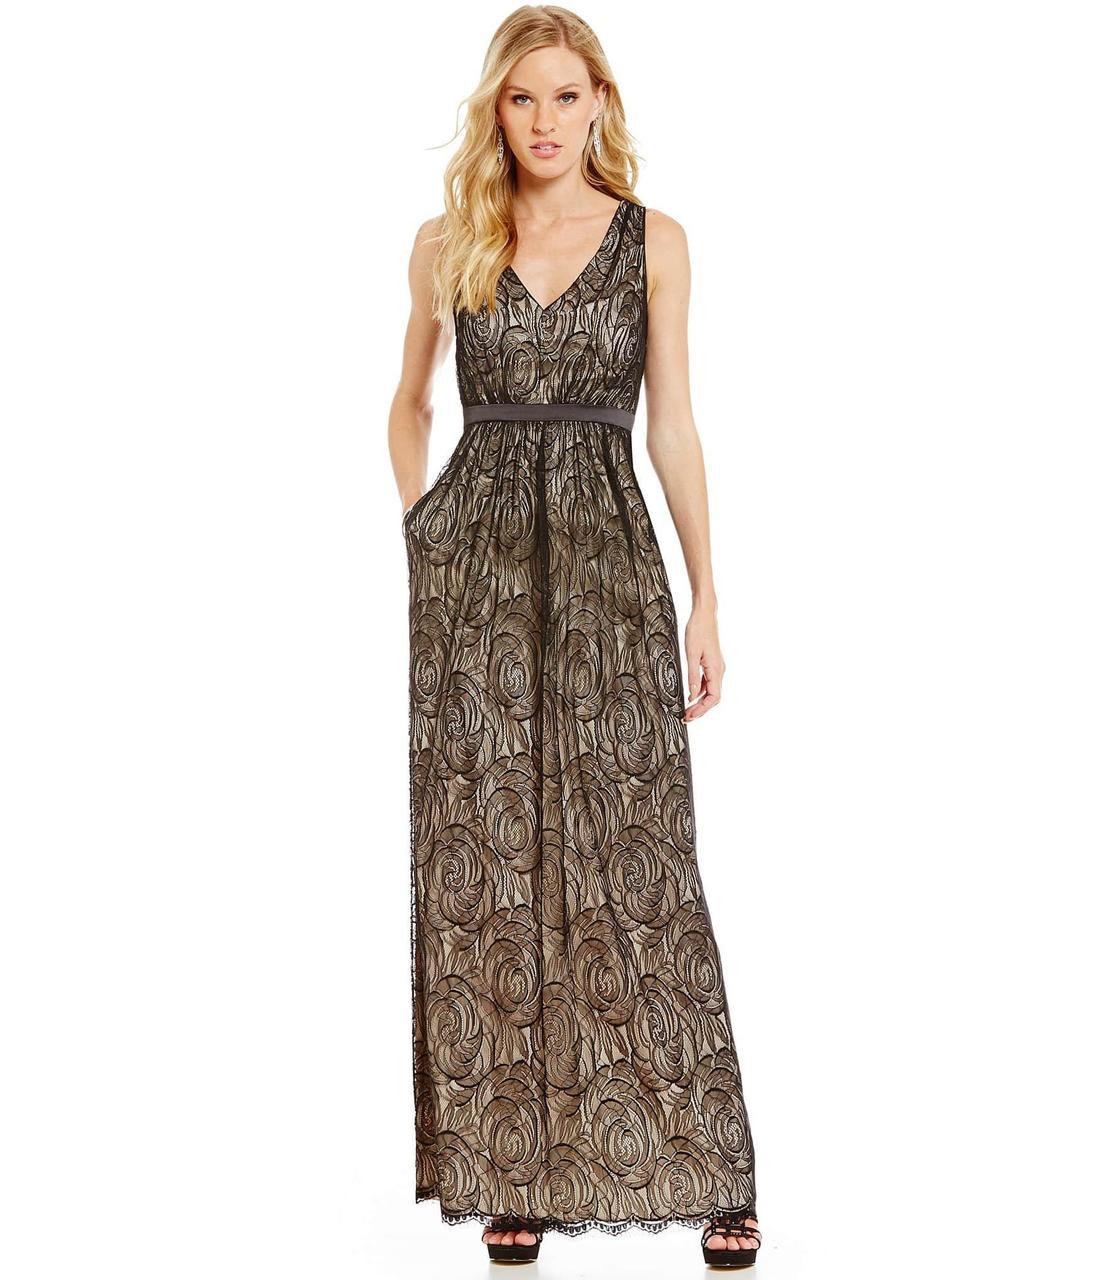 Adrianna Papell - V-Neckline Embellished Lace Dress 91927460
